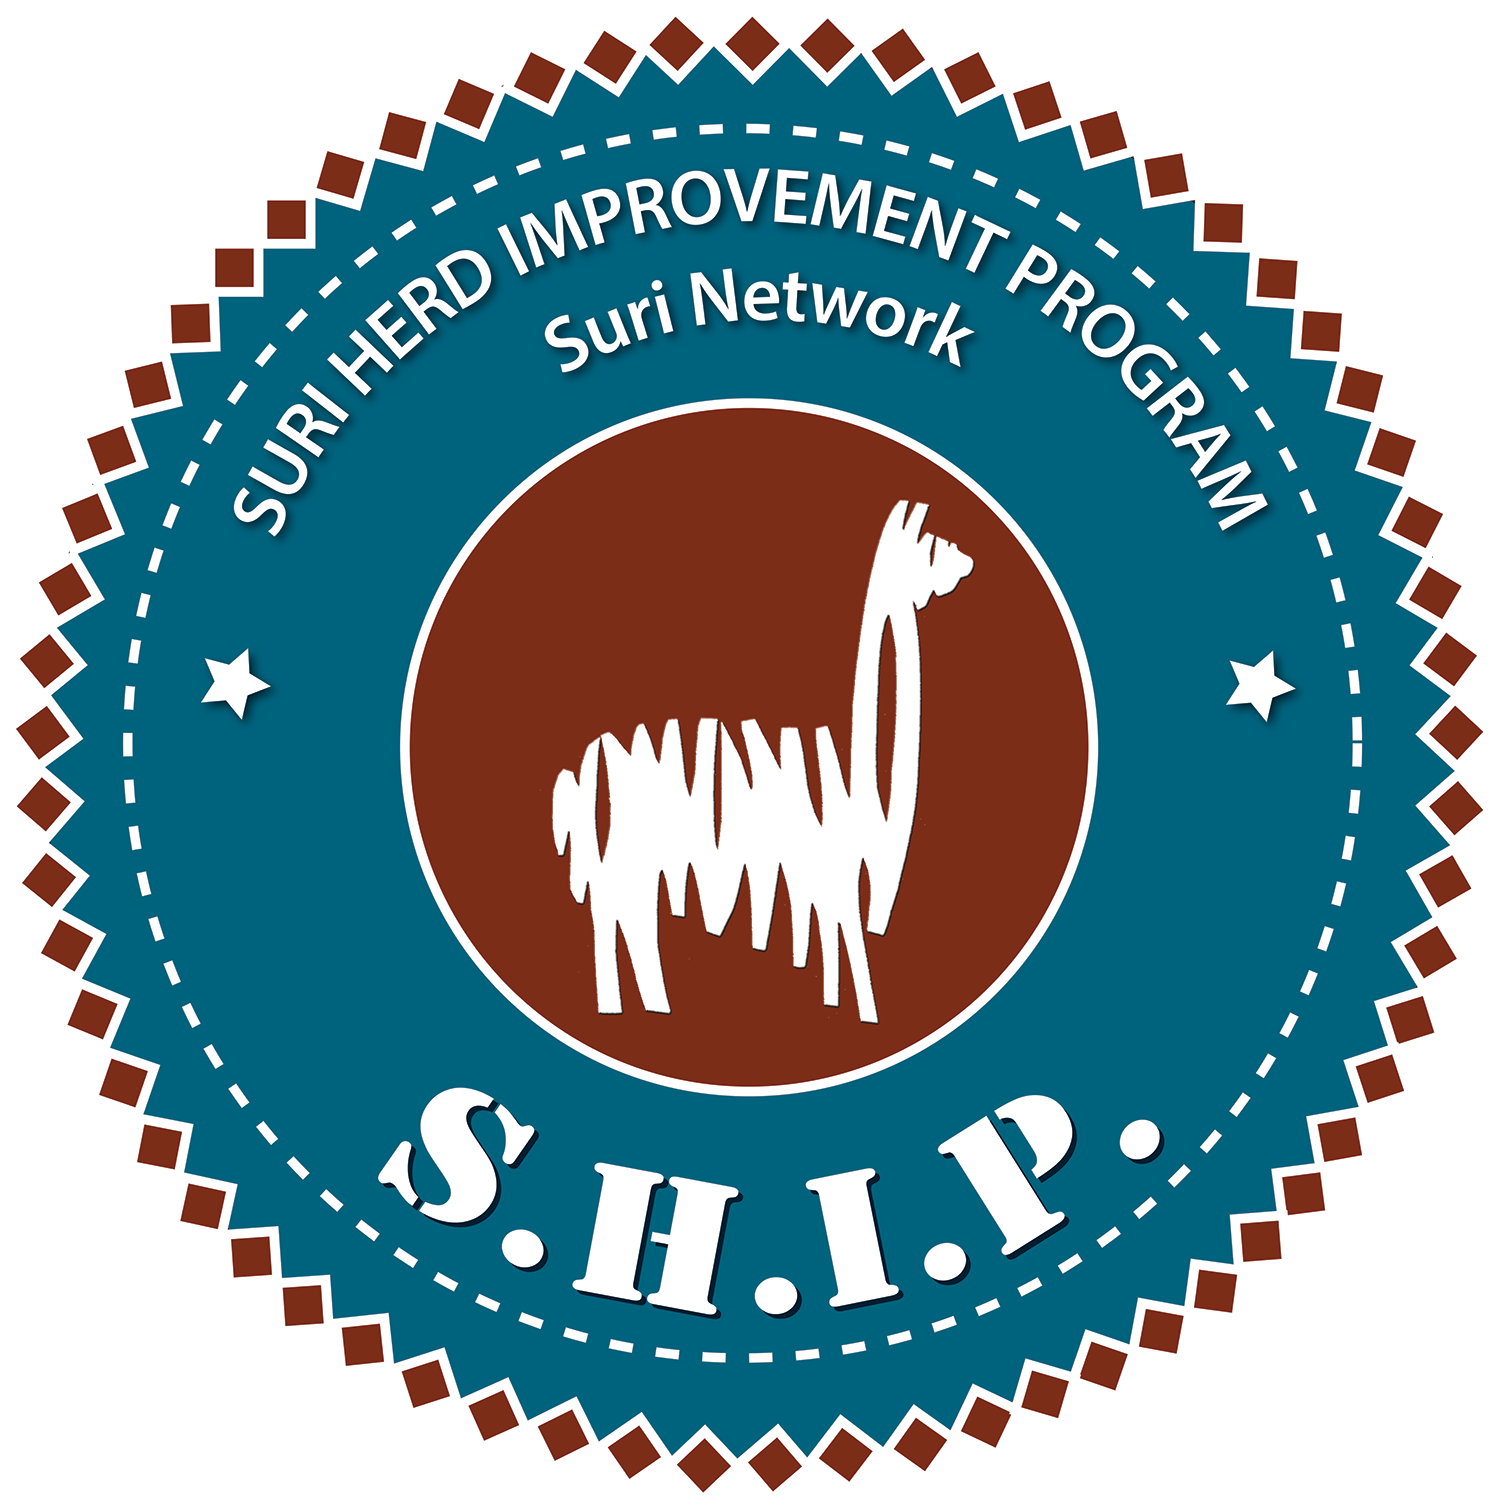 Suri network ship the. Evaluation clipart scorecard